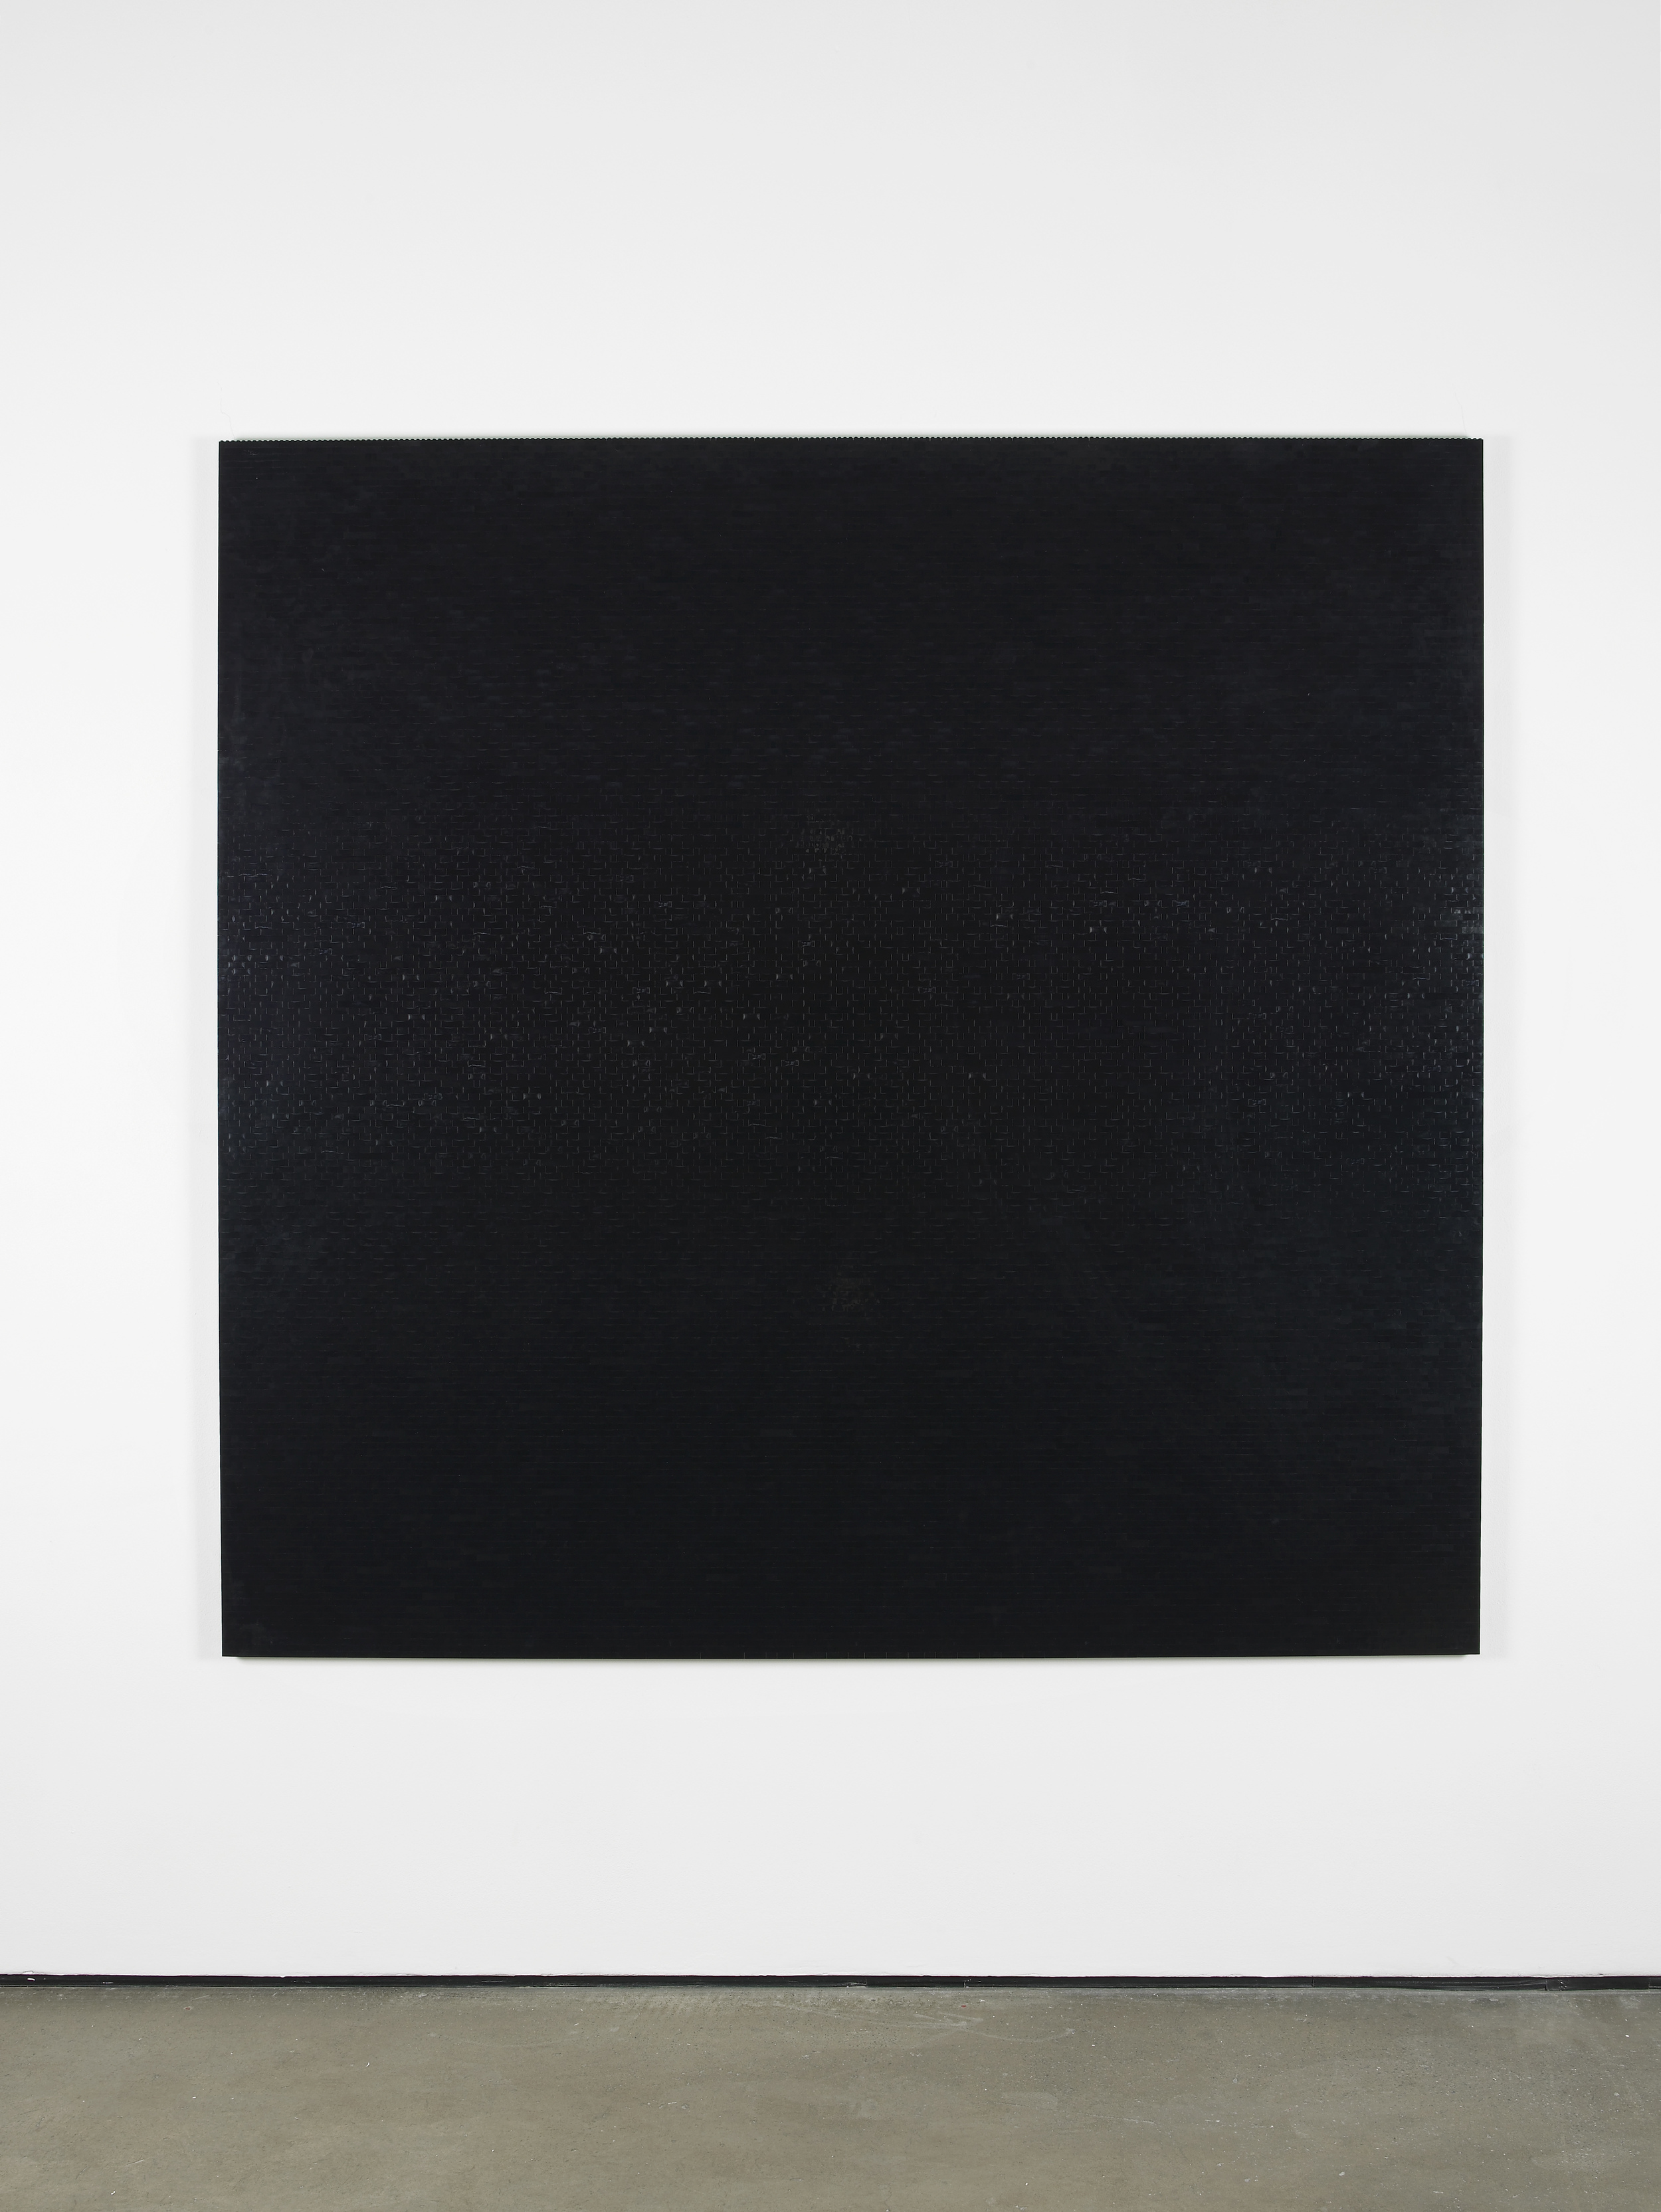     Michael Wilkinson Black Wall 7 2013 Black lego, wooden frame 185 x 185 x 3 cm / 72.8 x 72.8 x 1.1 in 